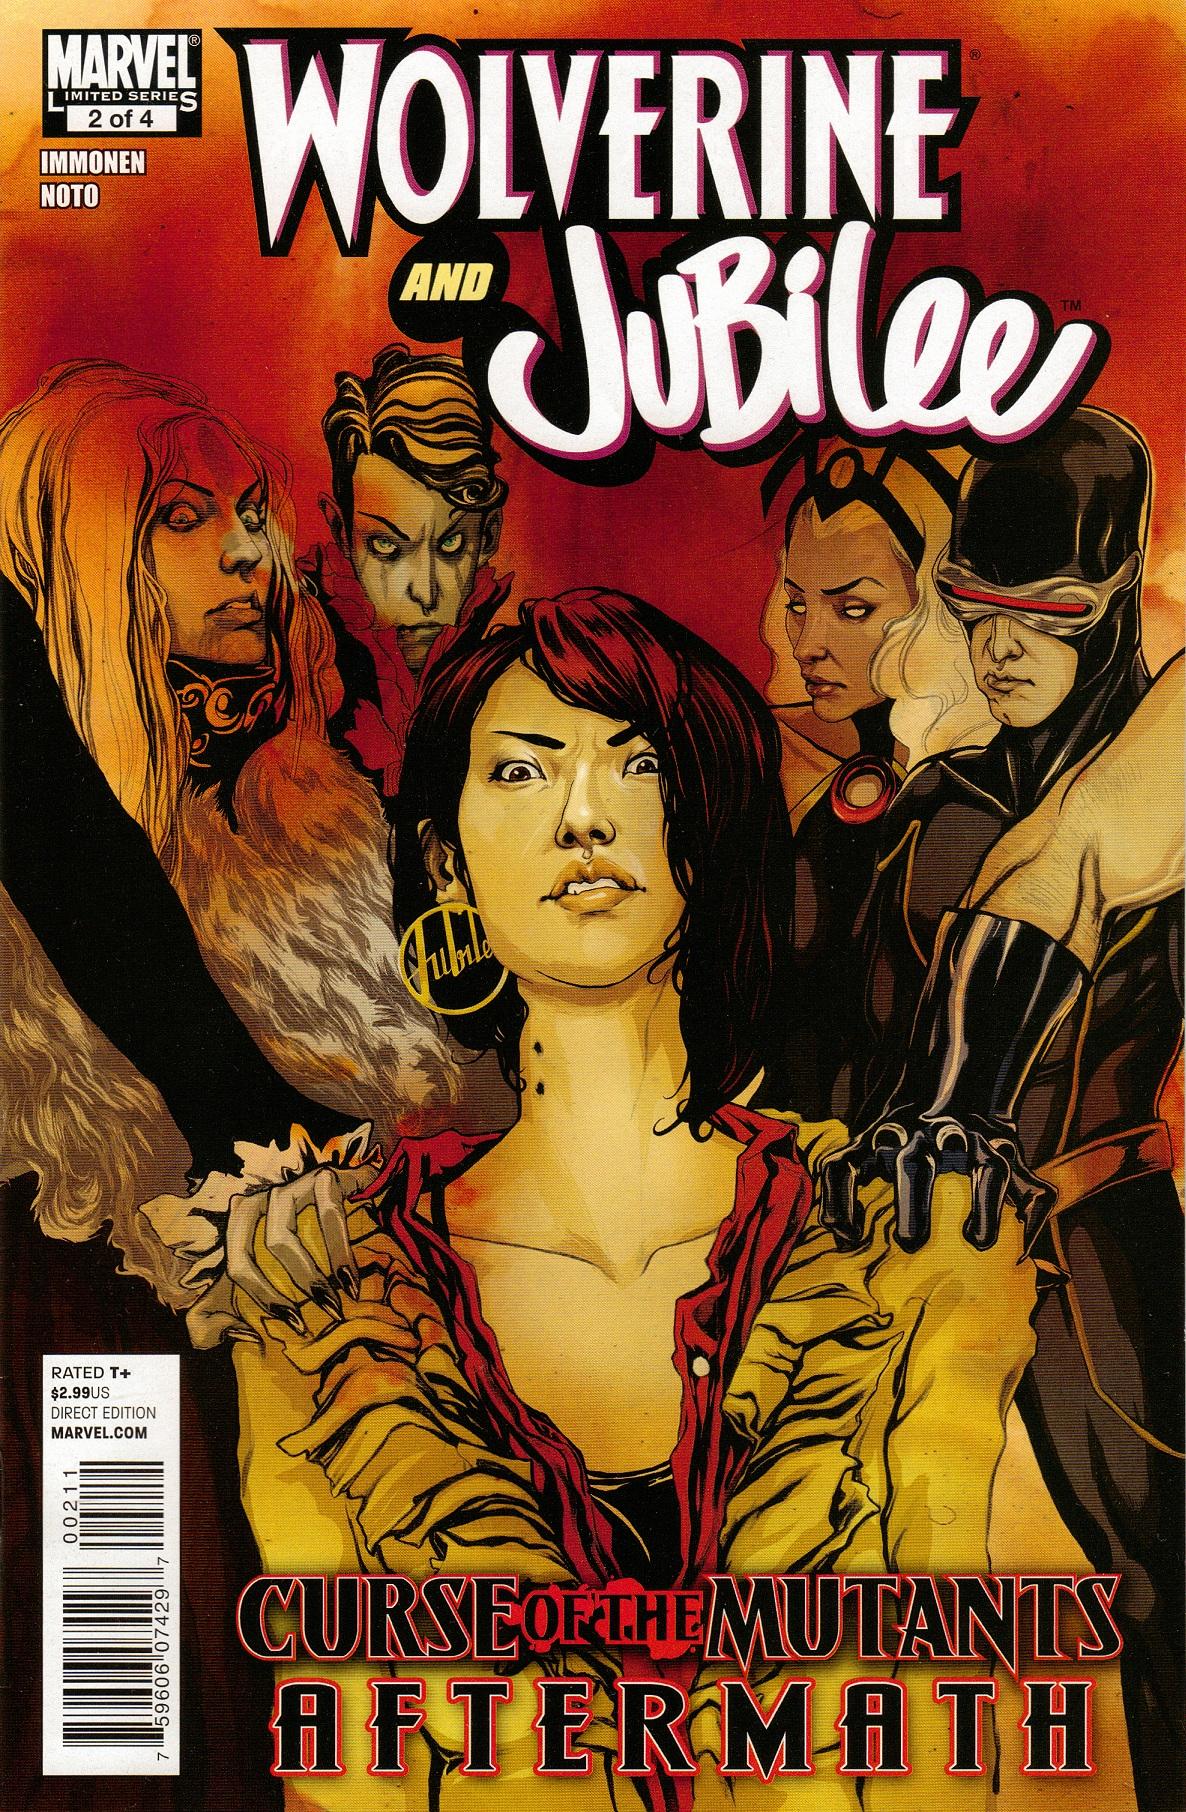 Wolverine and Jubilee Vol. 1 #2